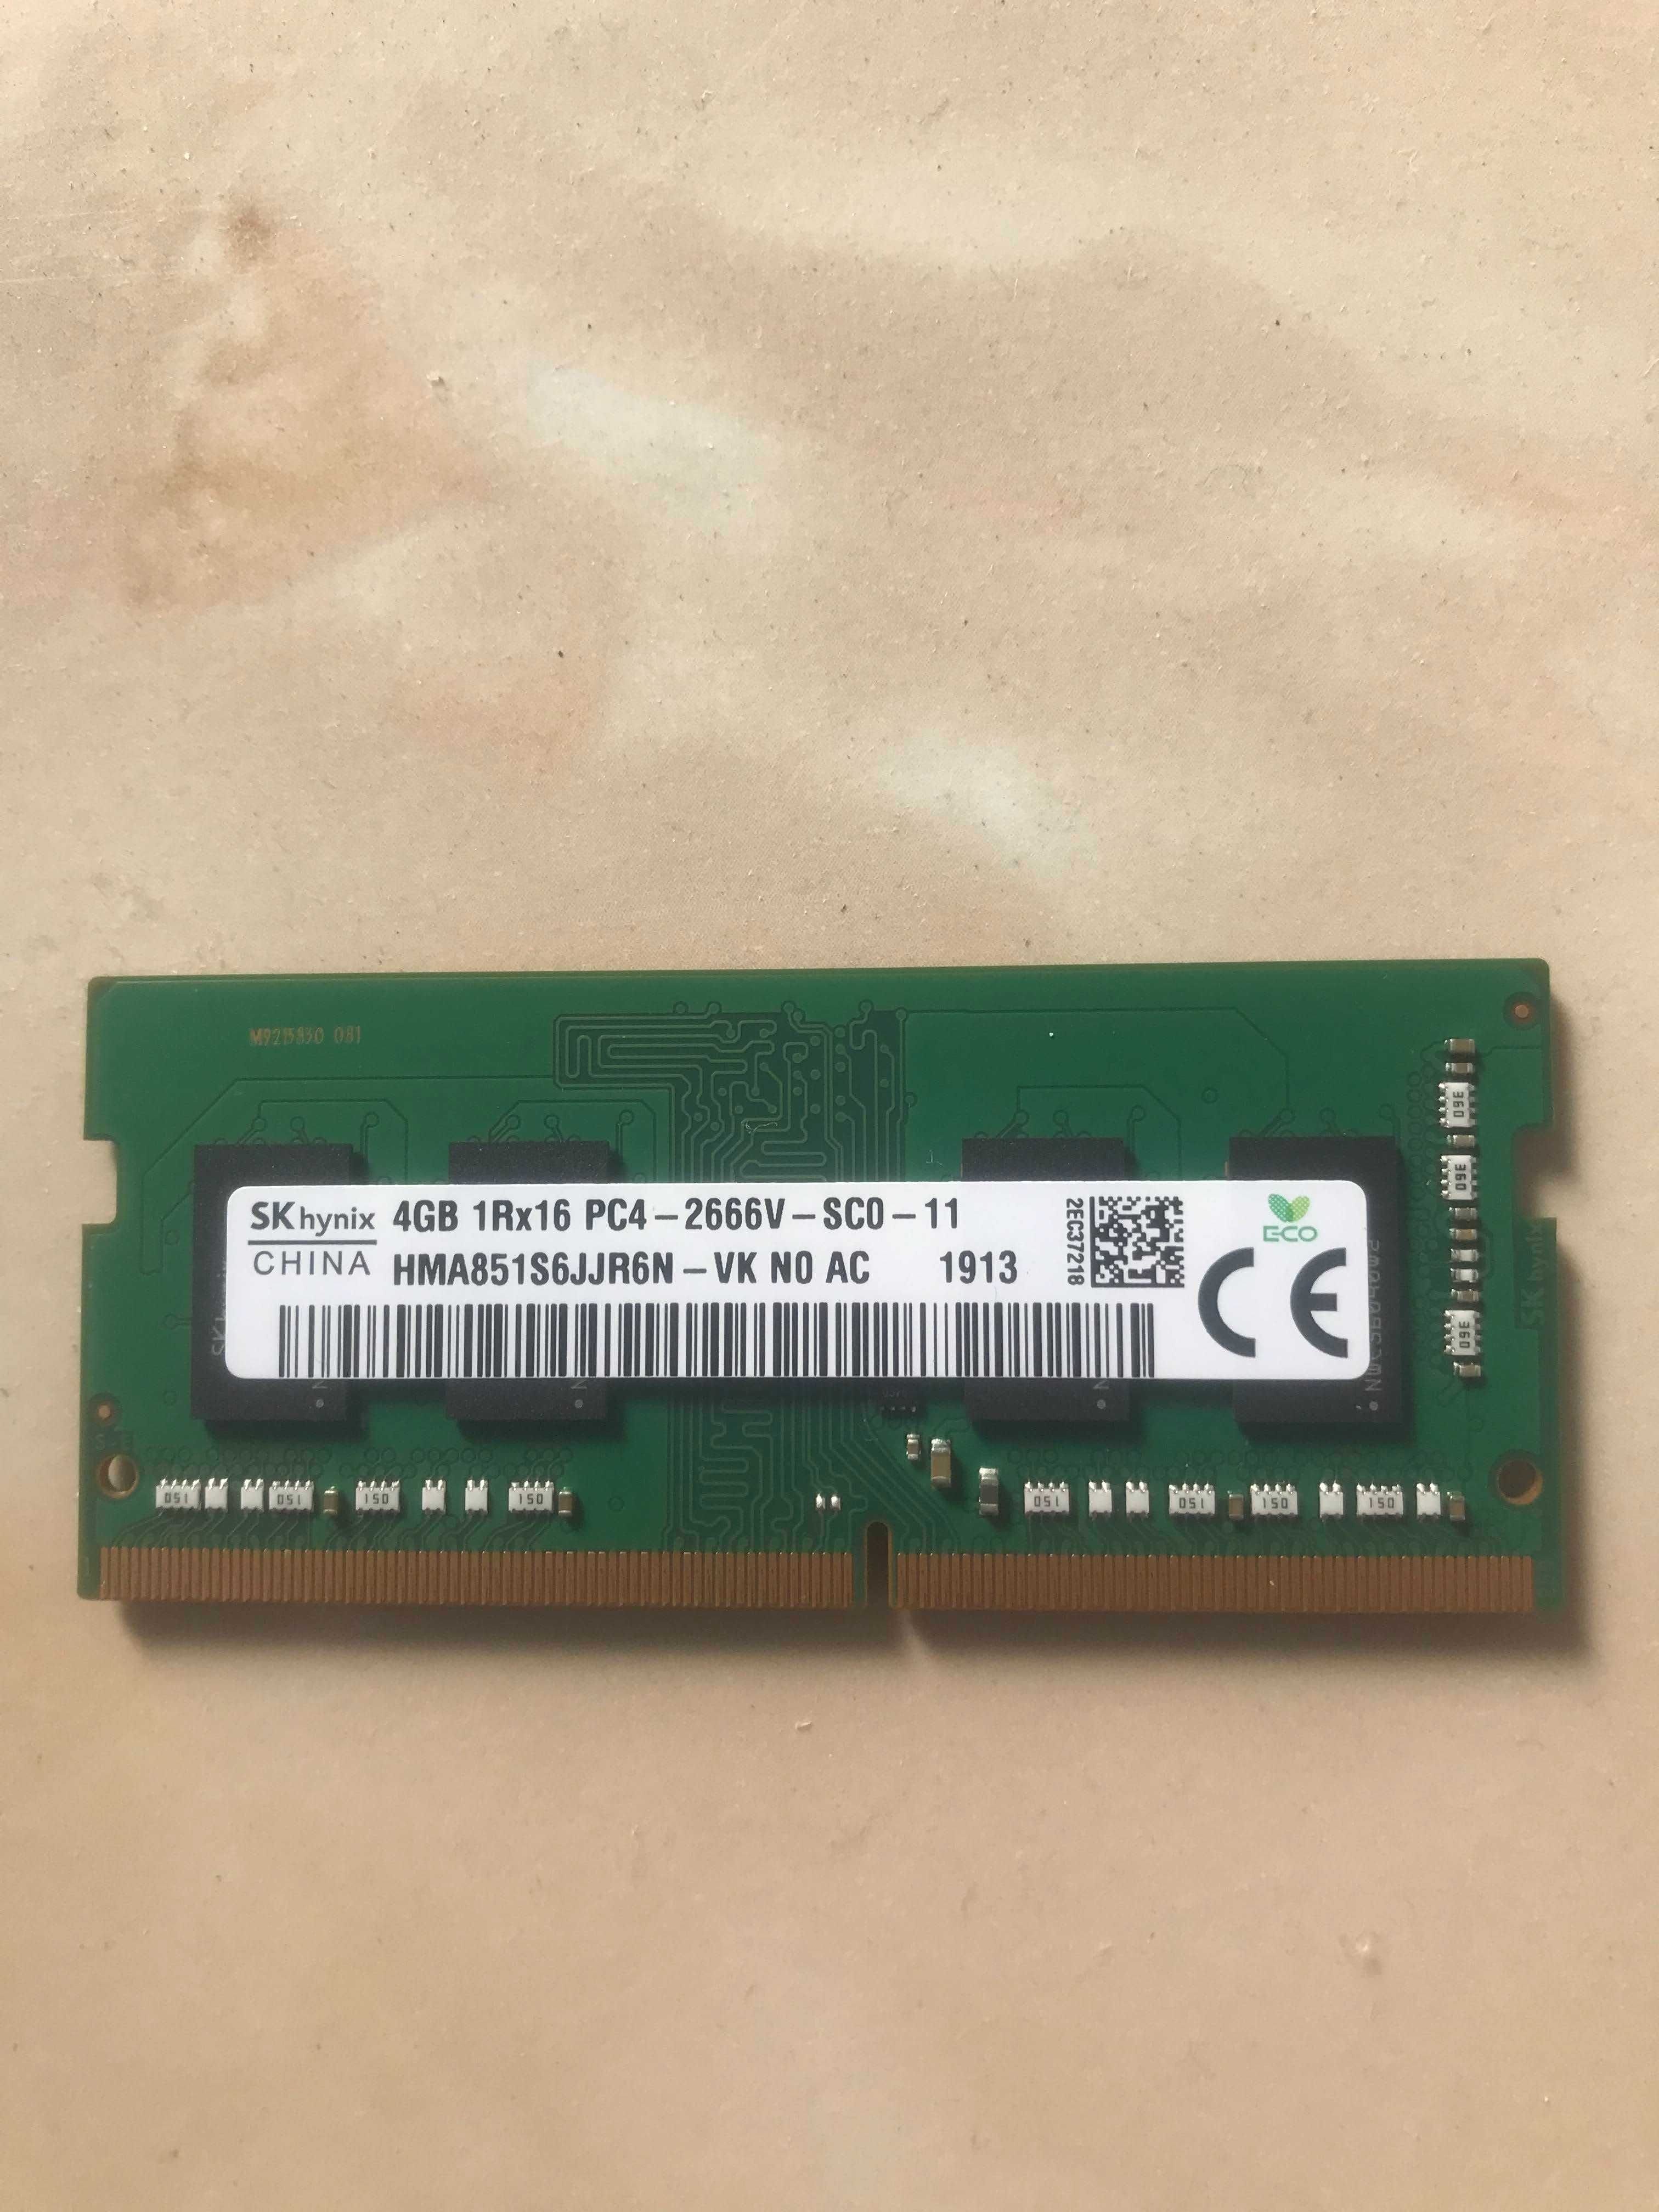 SK hynix 4GB 1Rx16 PC4-2666V-SC0-11